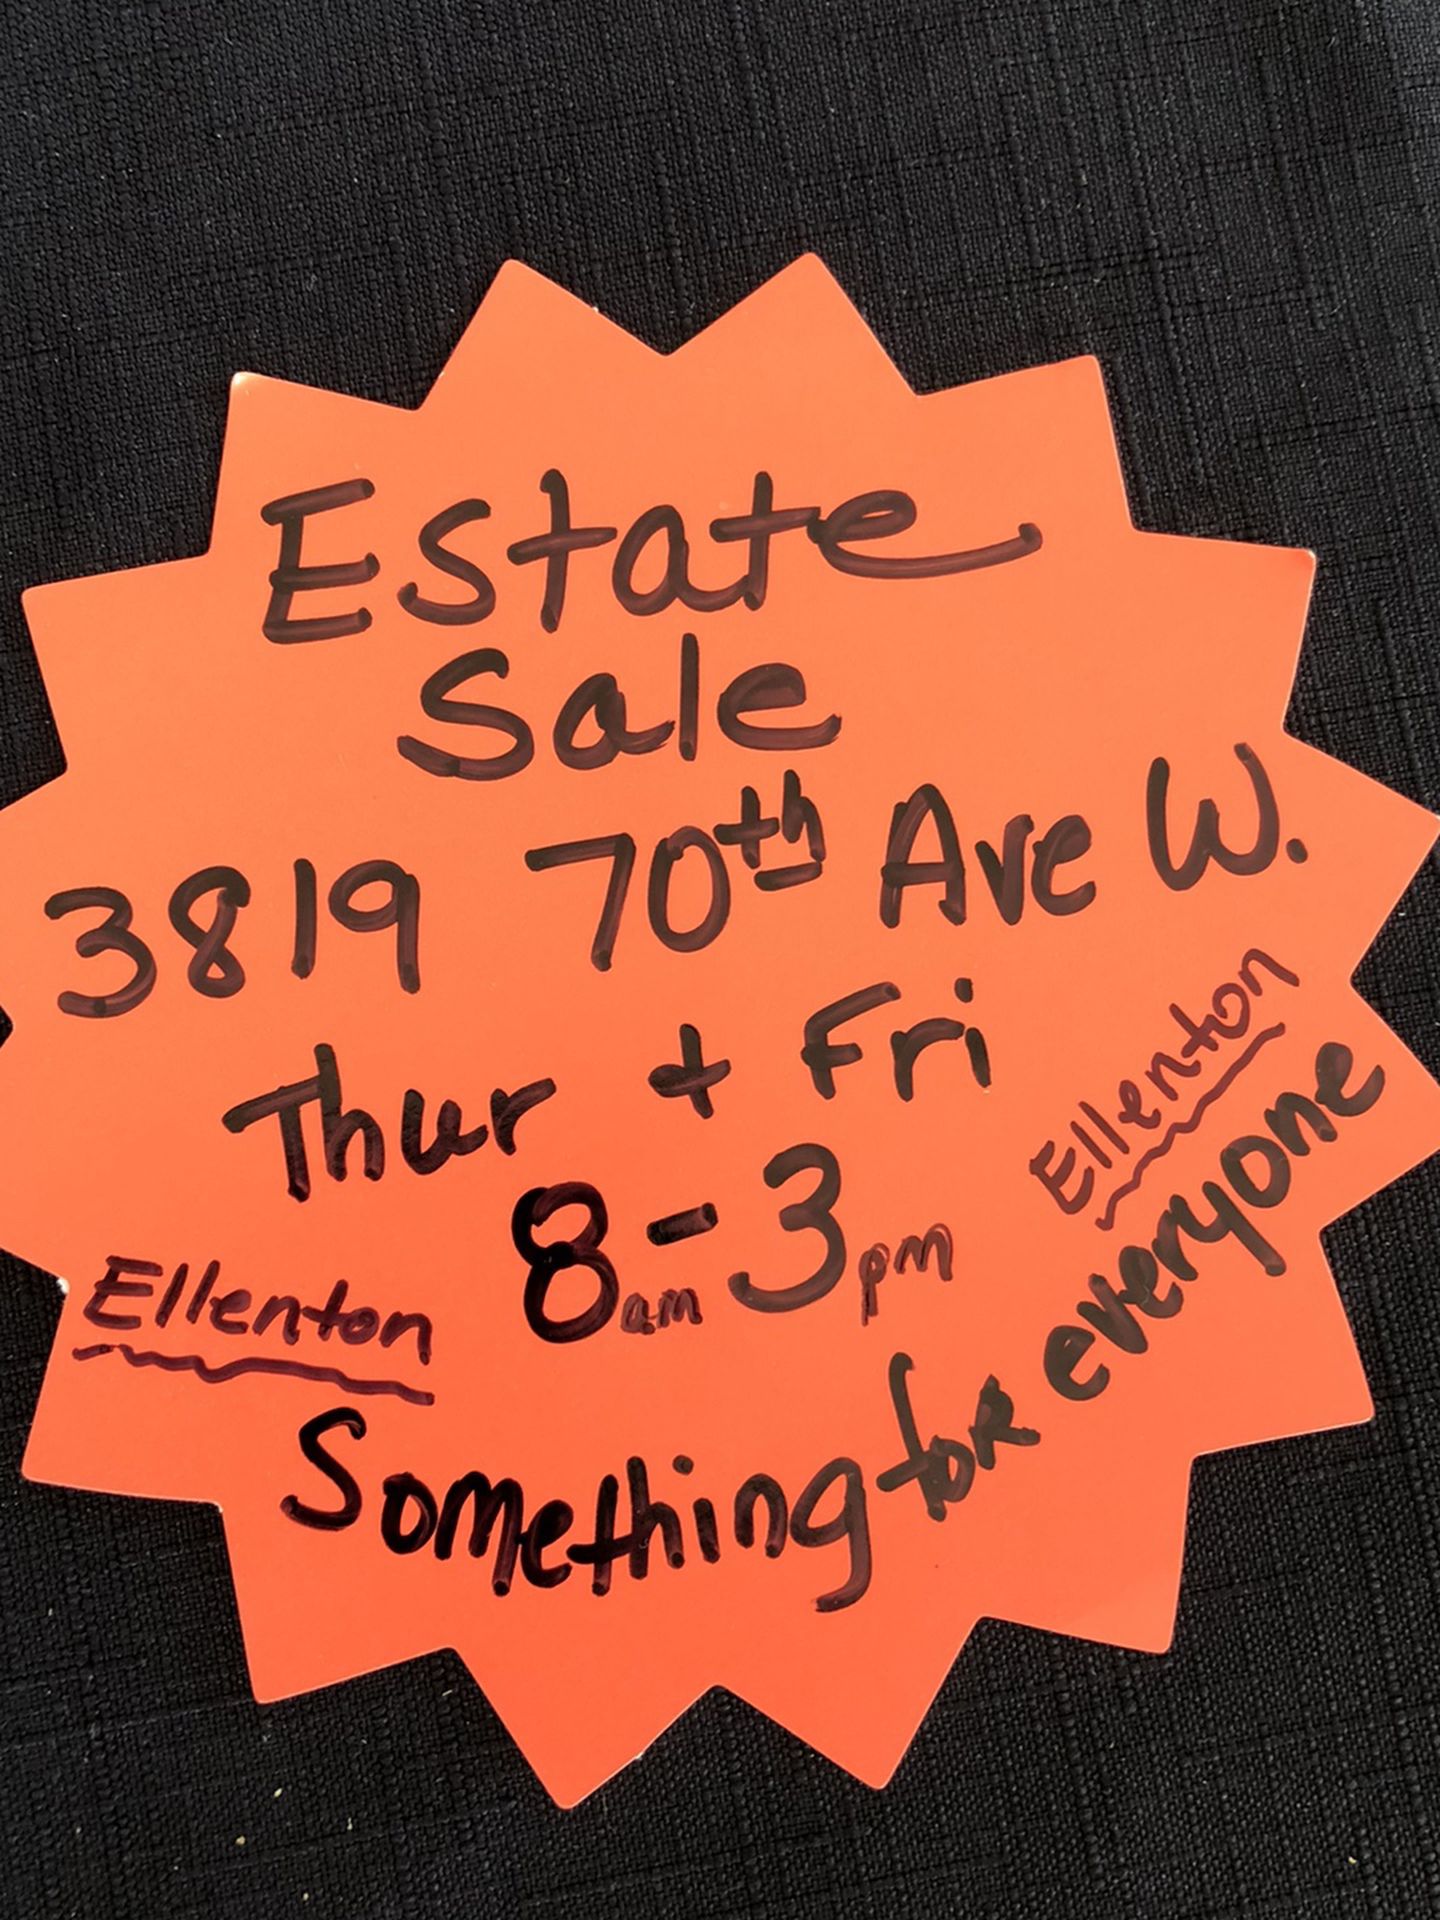 Awesome Estate sale